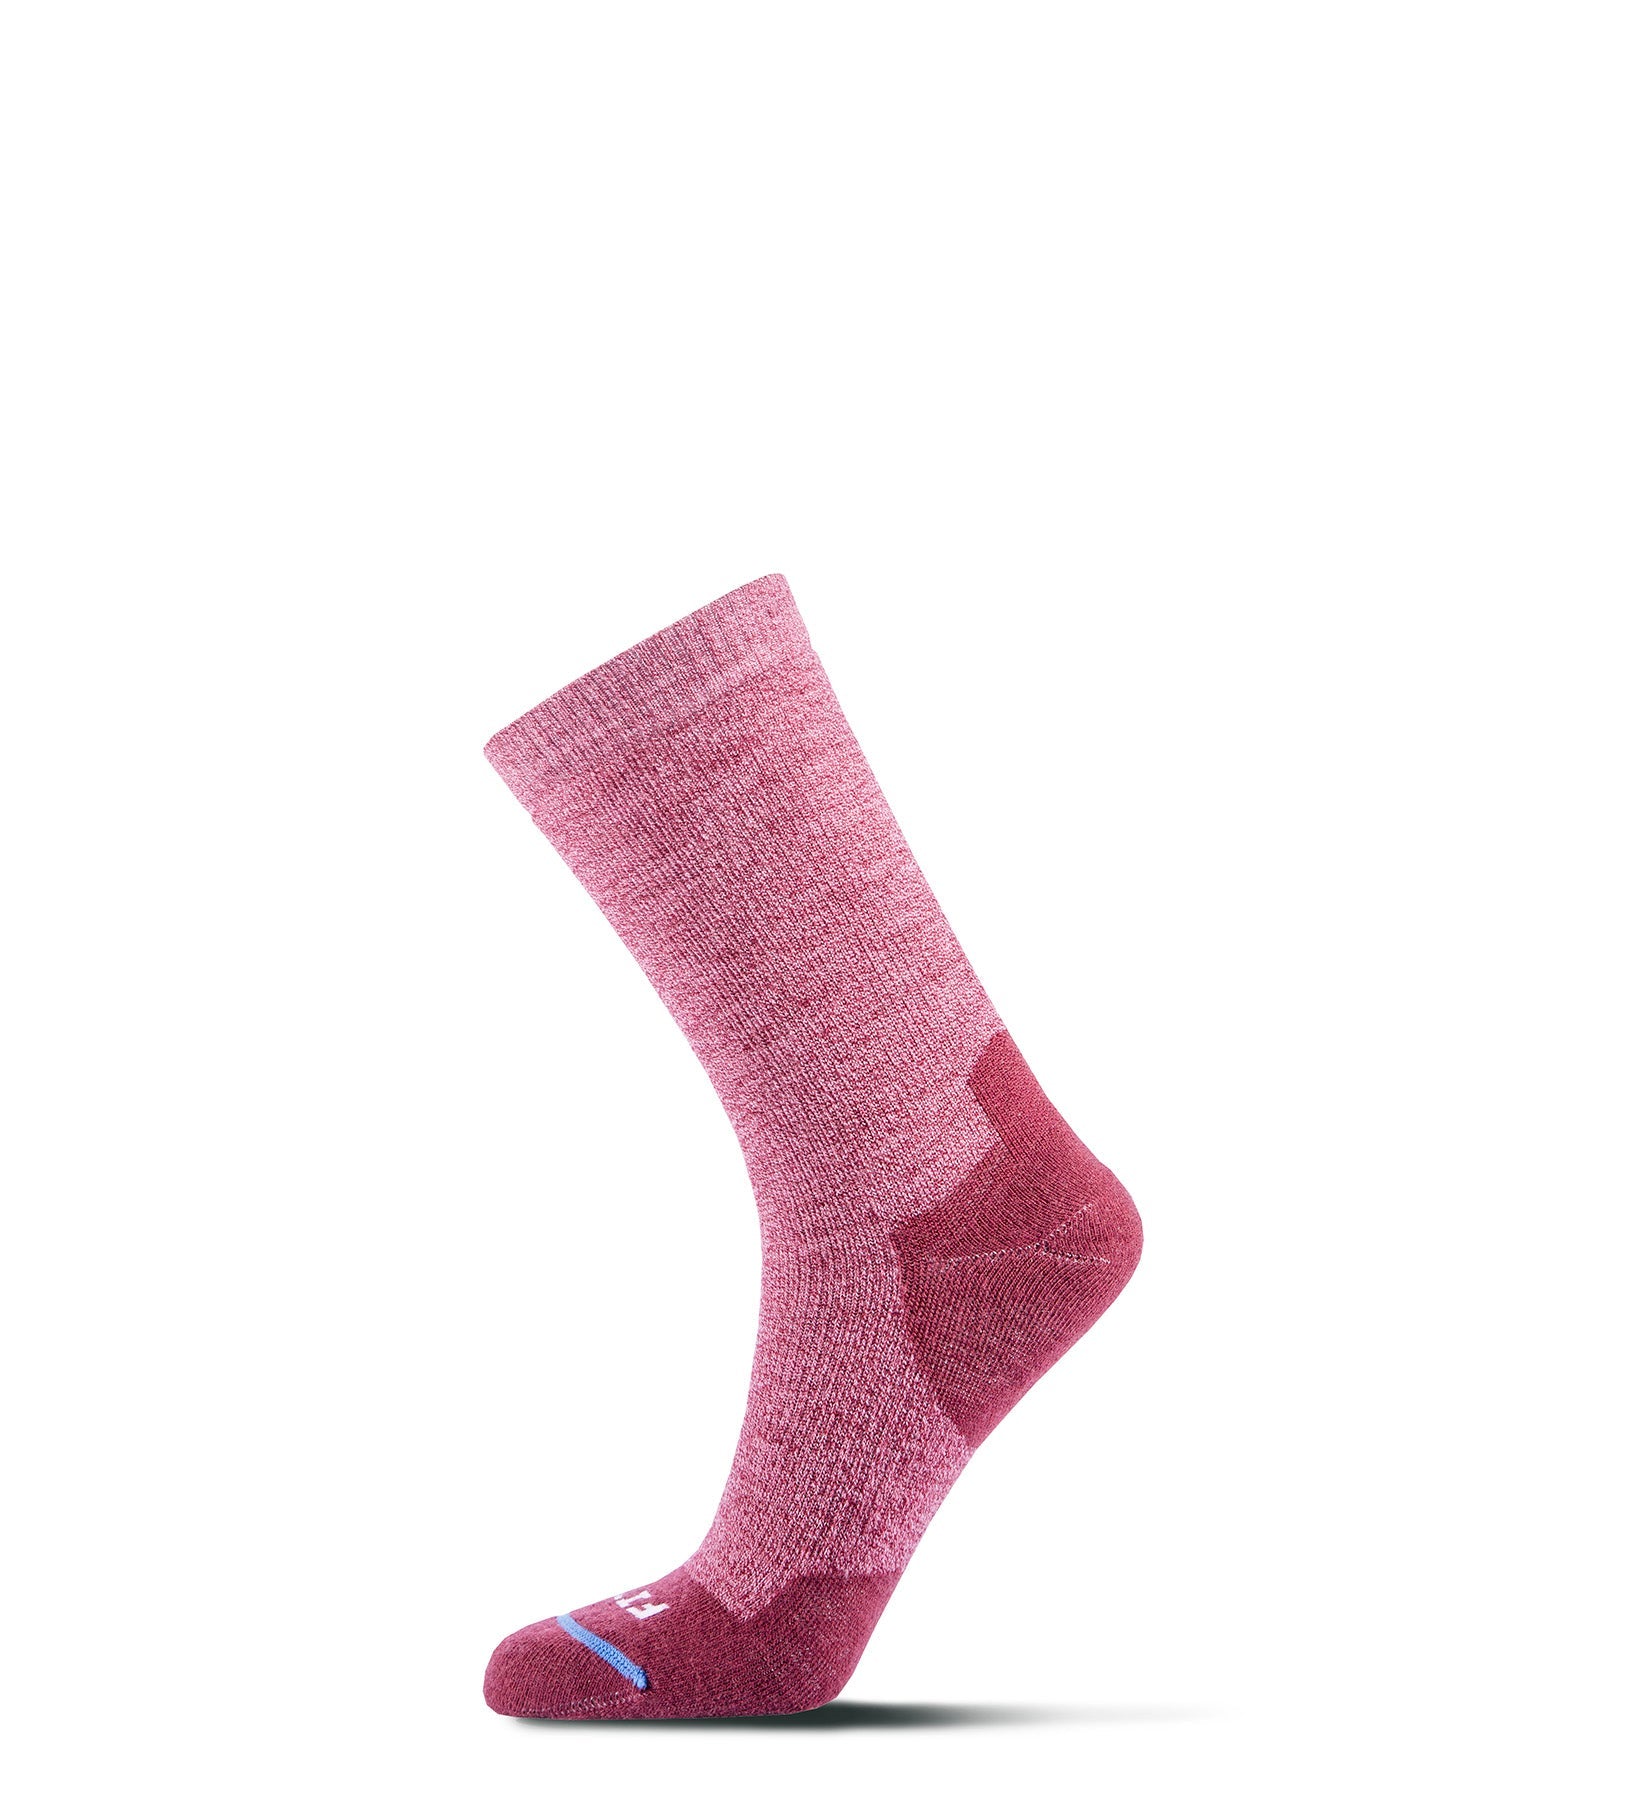 Pink Slouch Socks (Adult Medium)